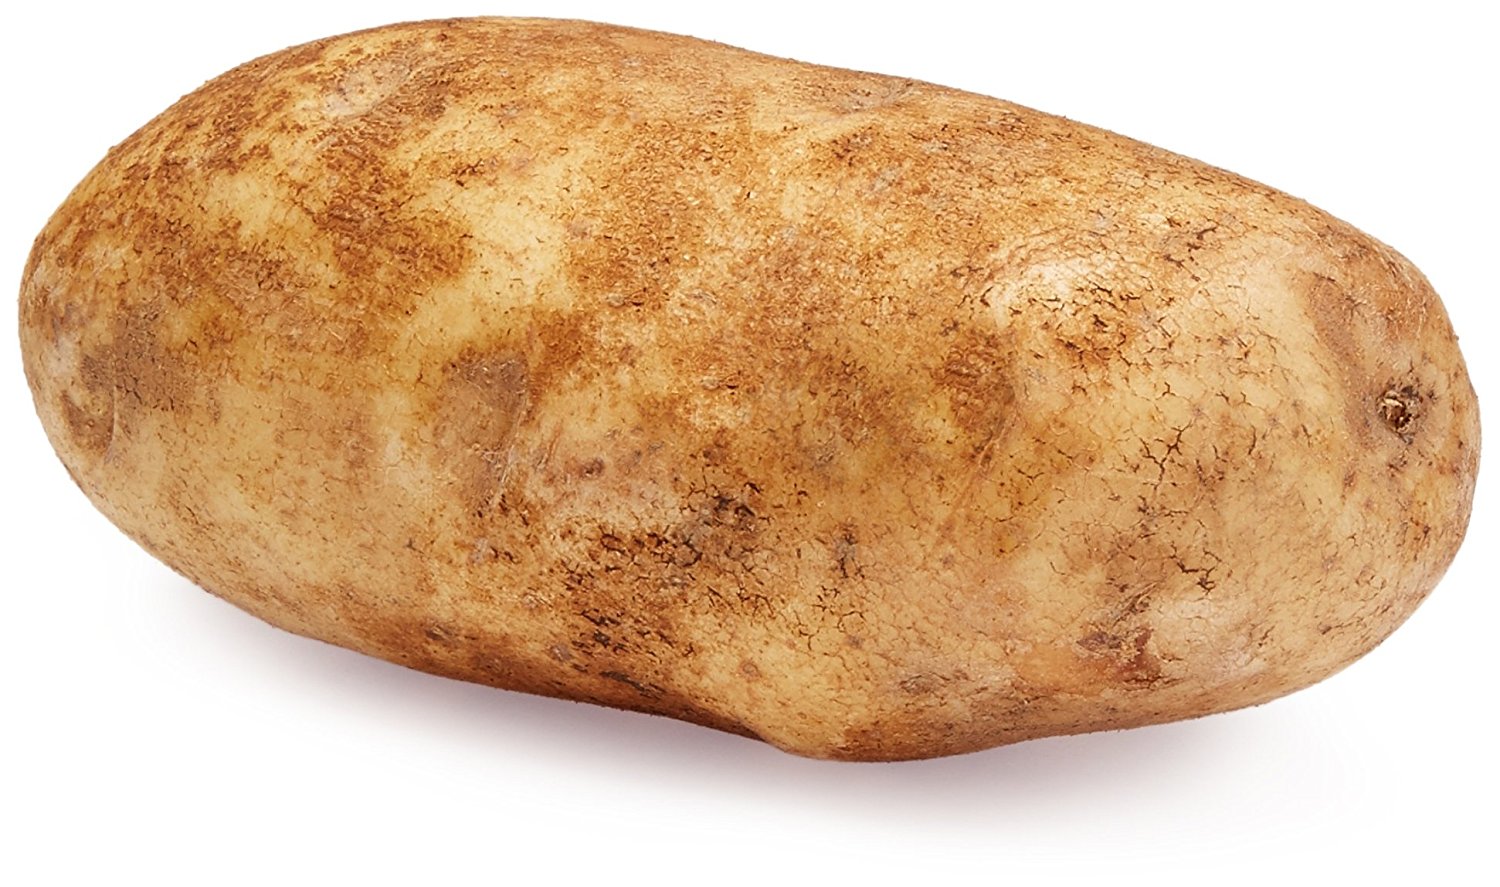 John’s Crispy Roasted Potatoes – Chrissy Teigen’s “Cravings”